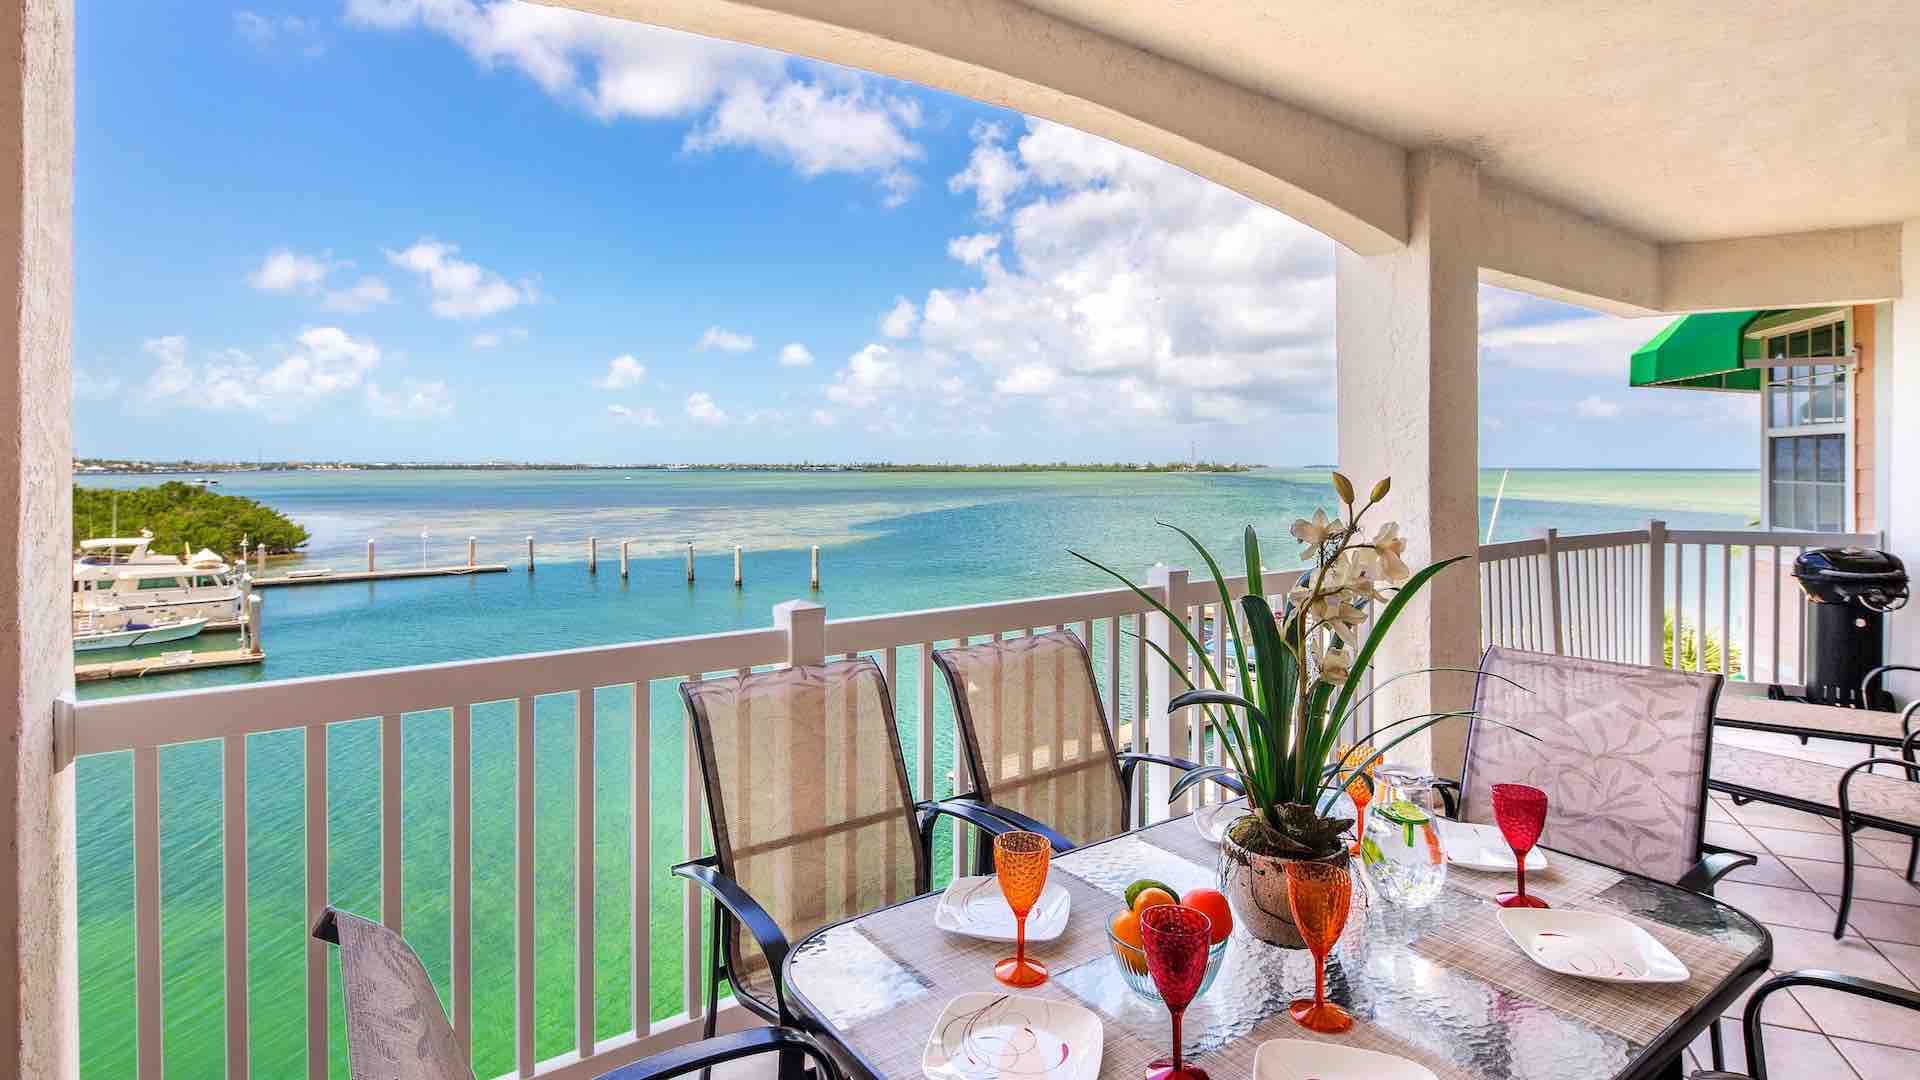 Key West travels, Sunset reverie vacation rental, 1920x1080 Full HD Desktop